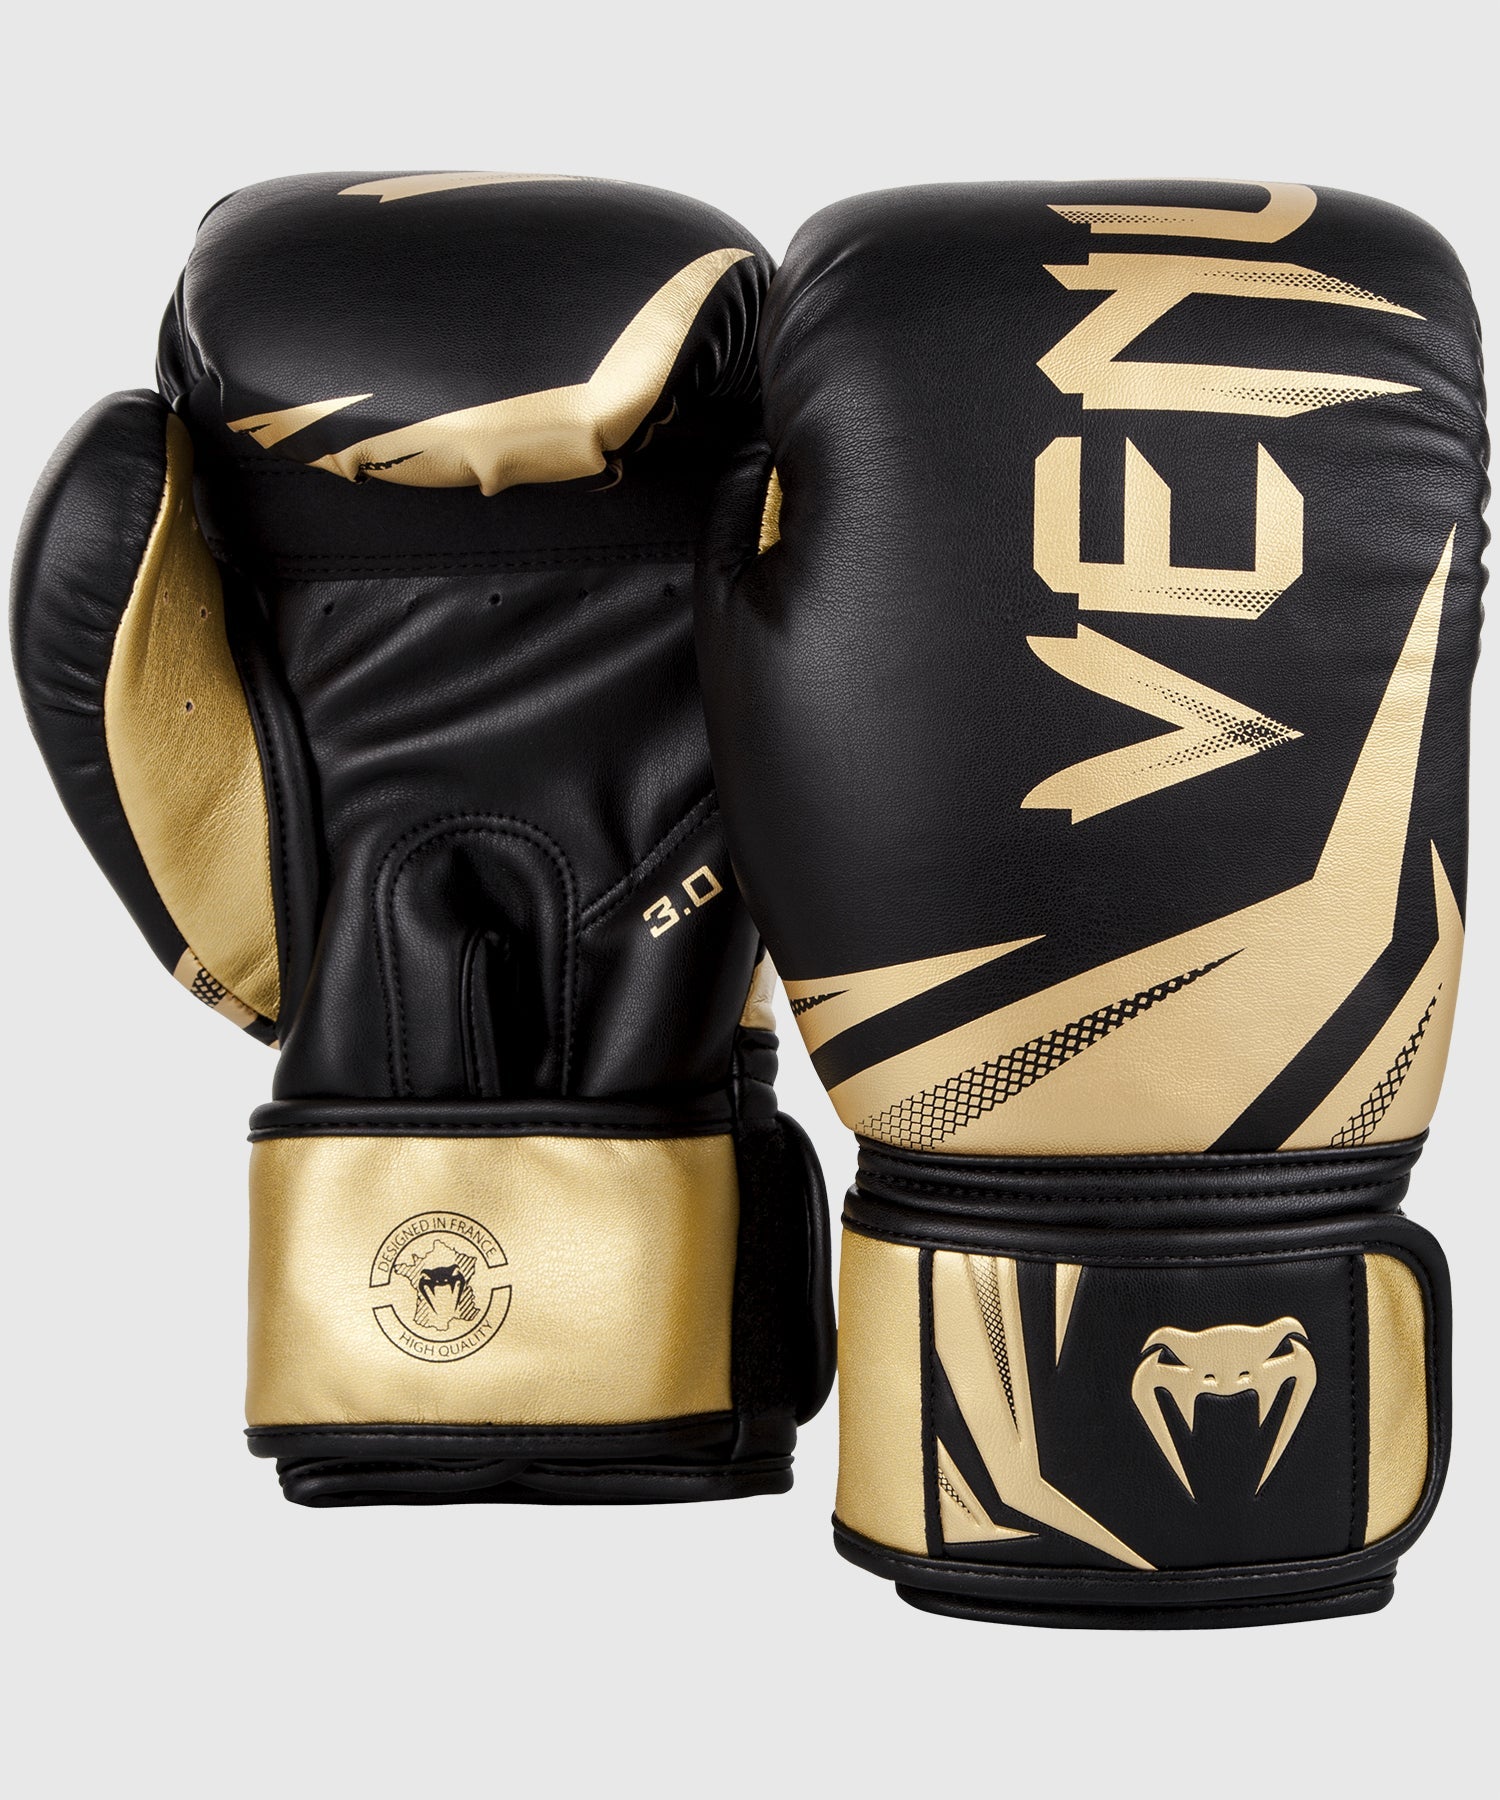 Venum Challenger 3.0 Boxing Gloves - Black/Gold – Venum Europe